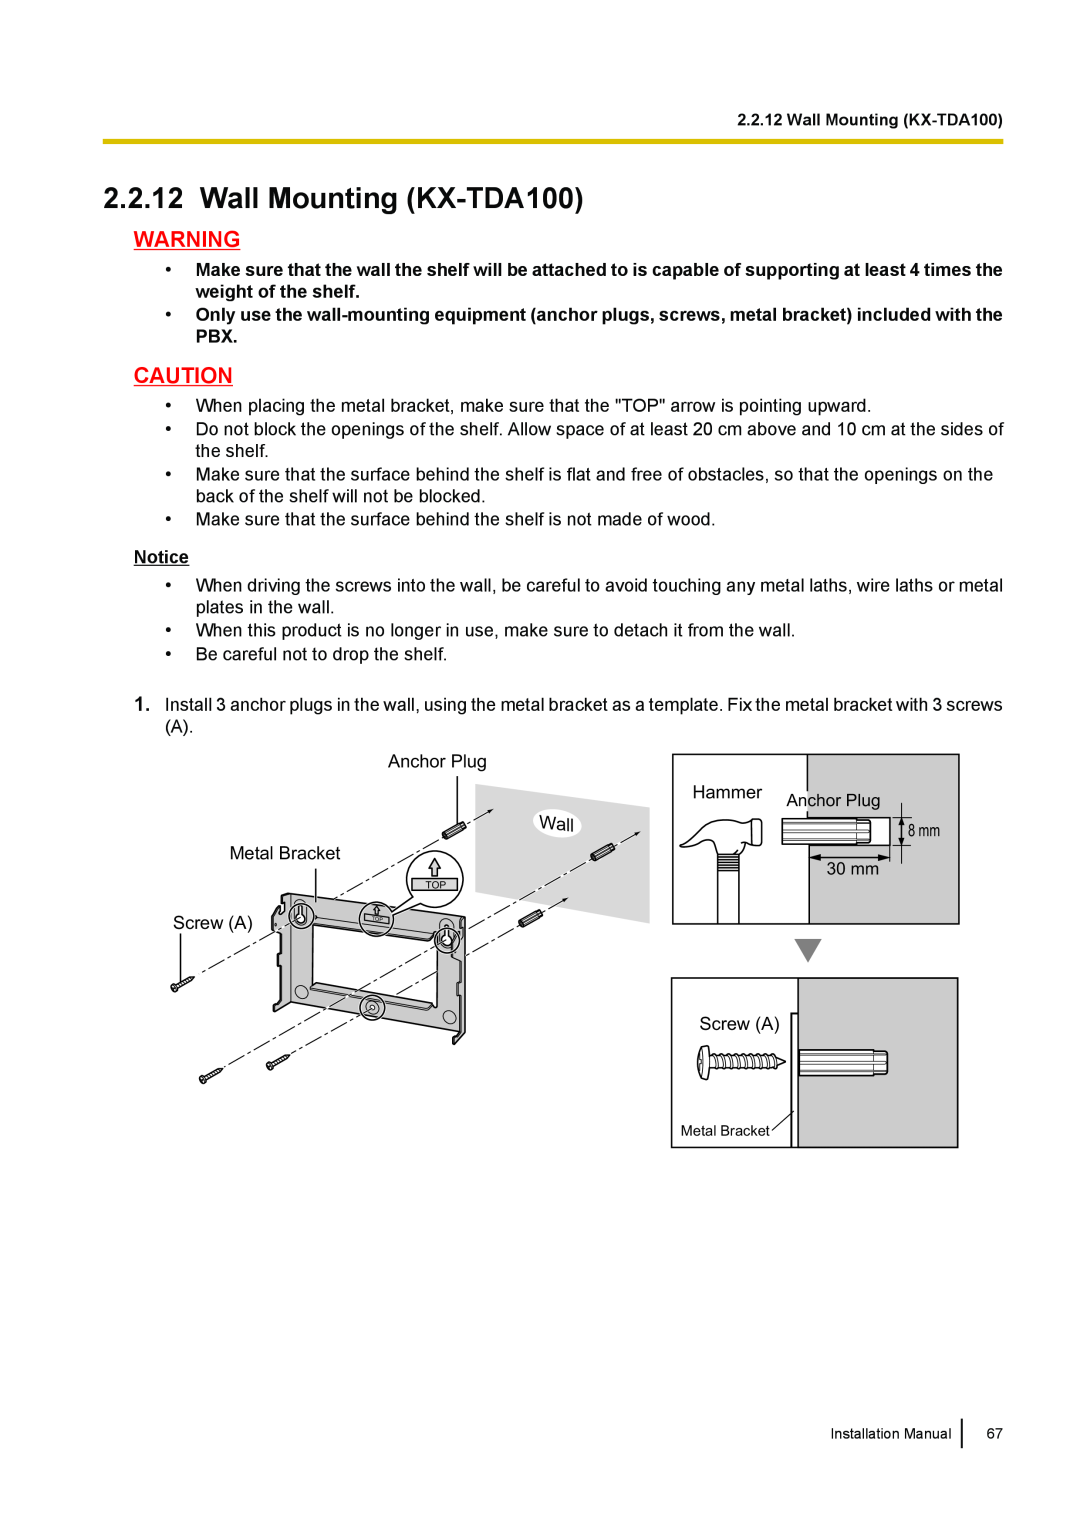 Panasonic installation manual Wall Mounting KX-TDA100 